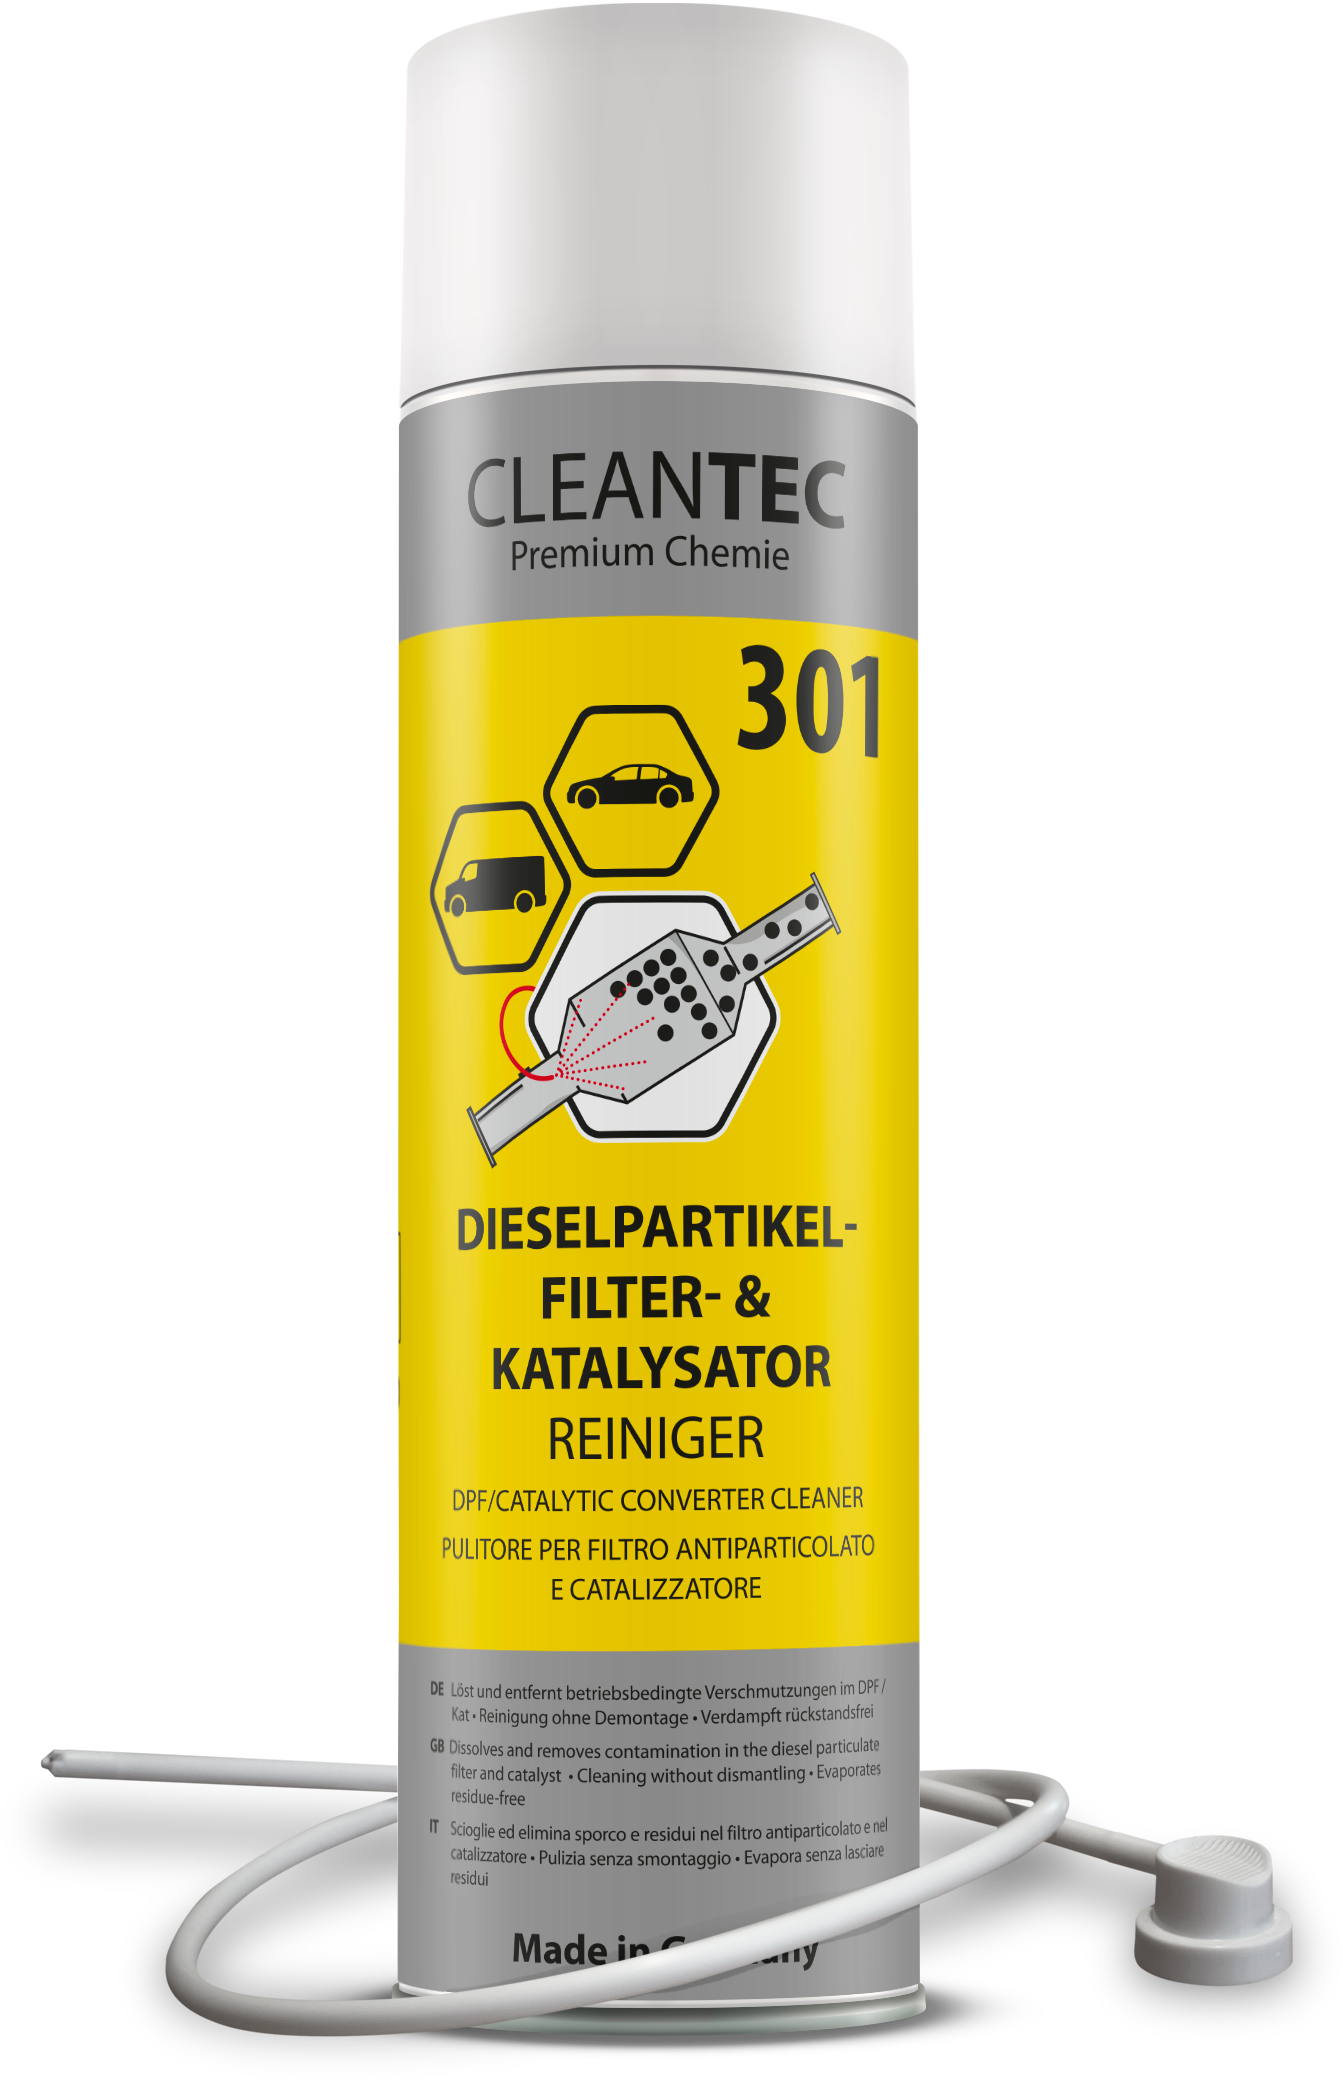 https://www.cleantec-chemie.com/images/Produkte/301/46116_CLEANTEC_301_Schmal.png